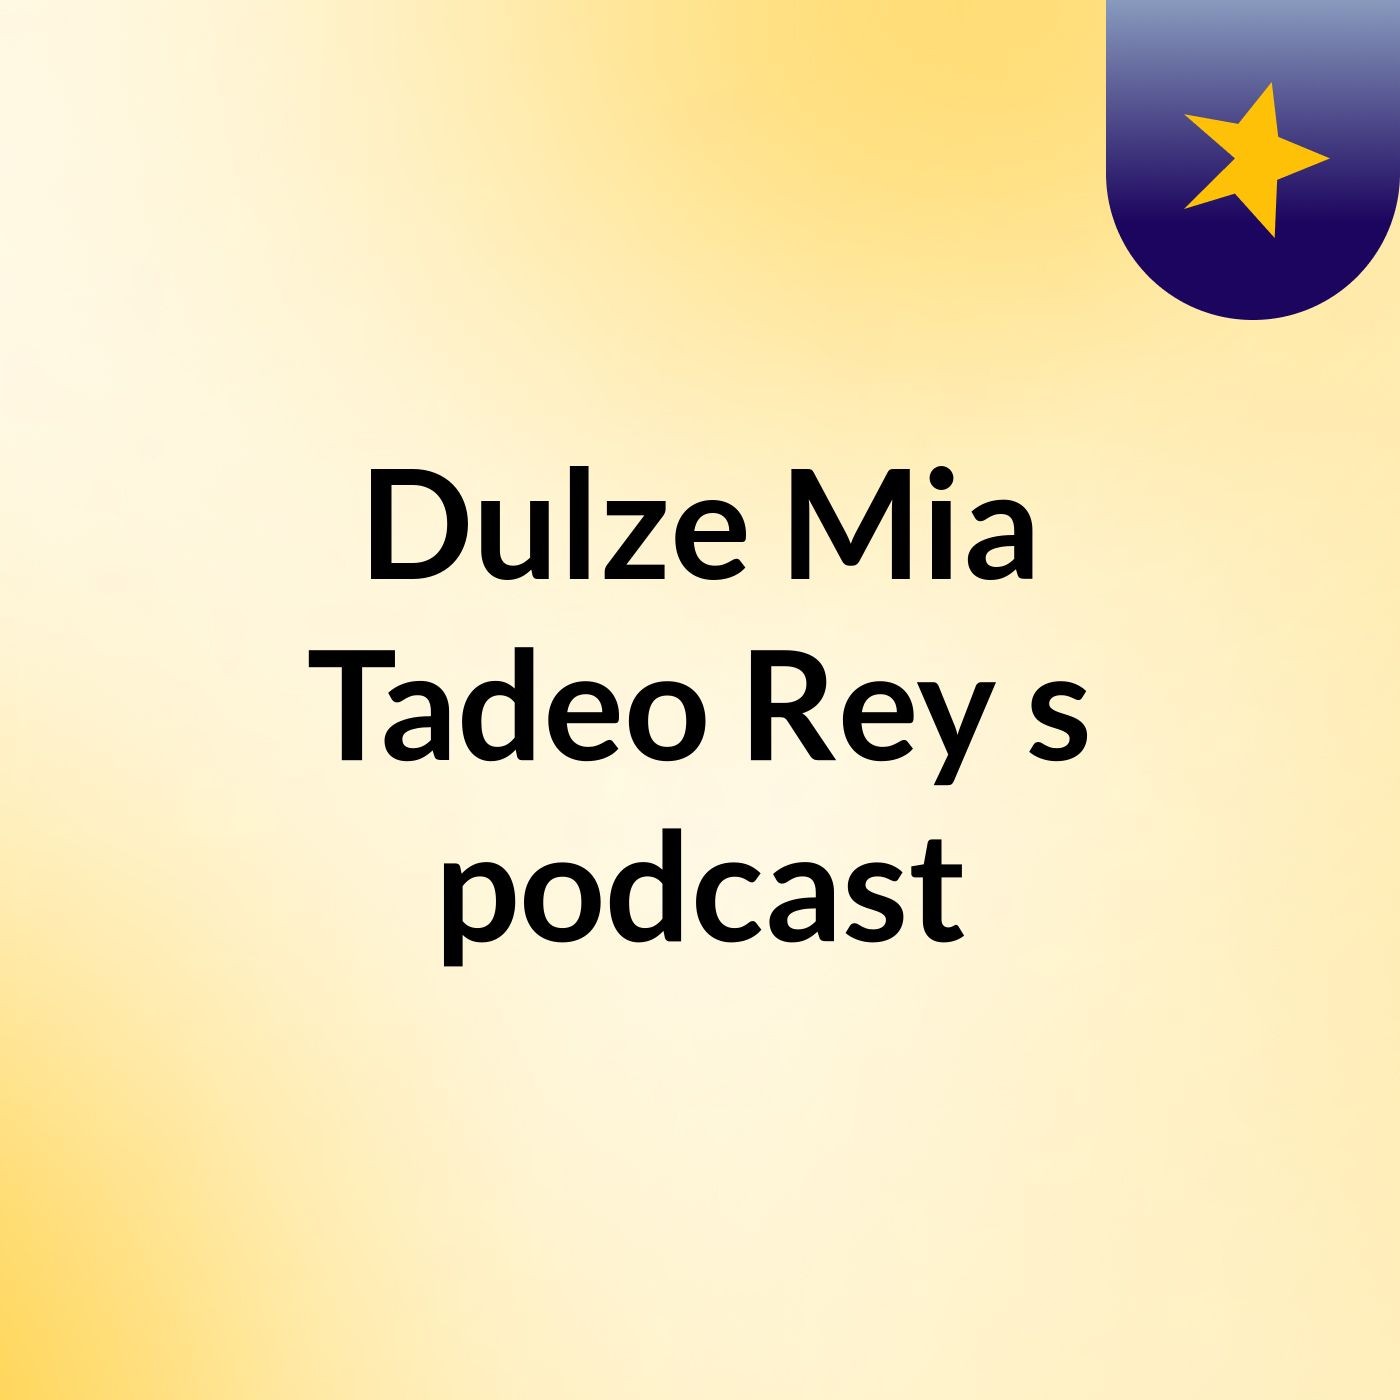 Episodio 24 - Dulze Mia Tadeo Rey's podcast